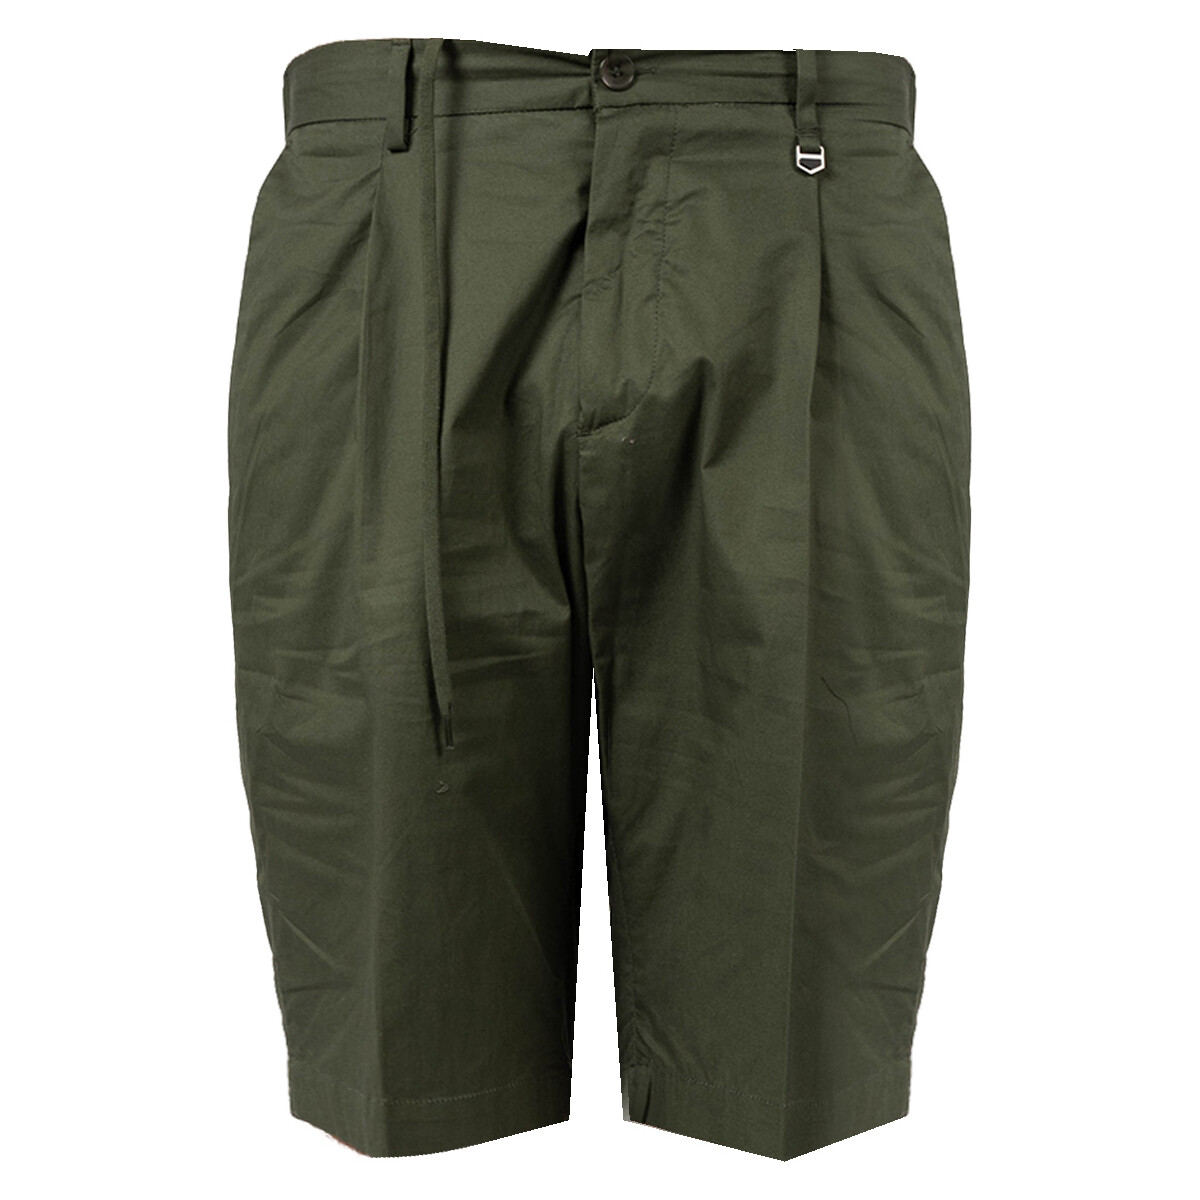 Vêtements Homme Shorts / Bermudas Antony Morato MMSH00177-FA900125 | Gustaf Vert